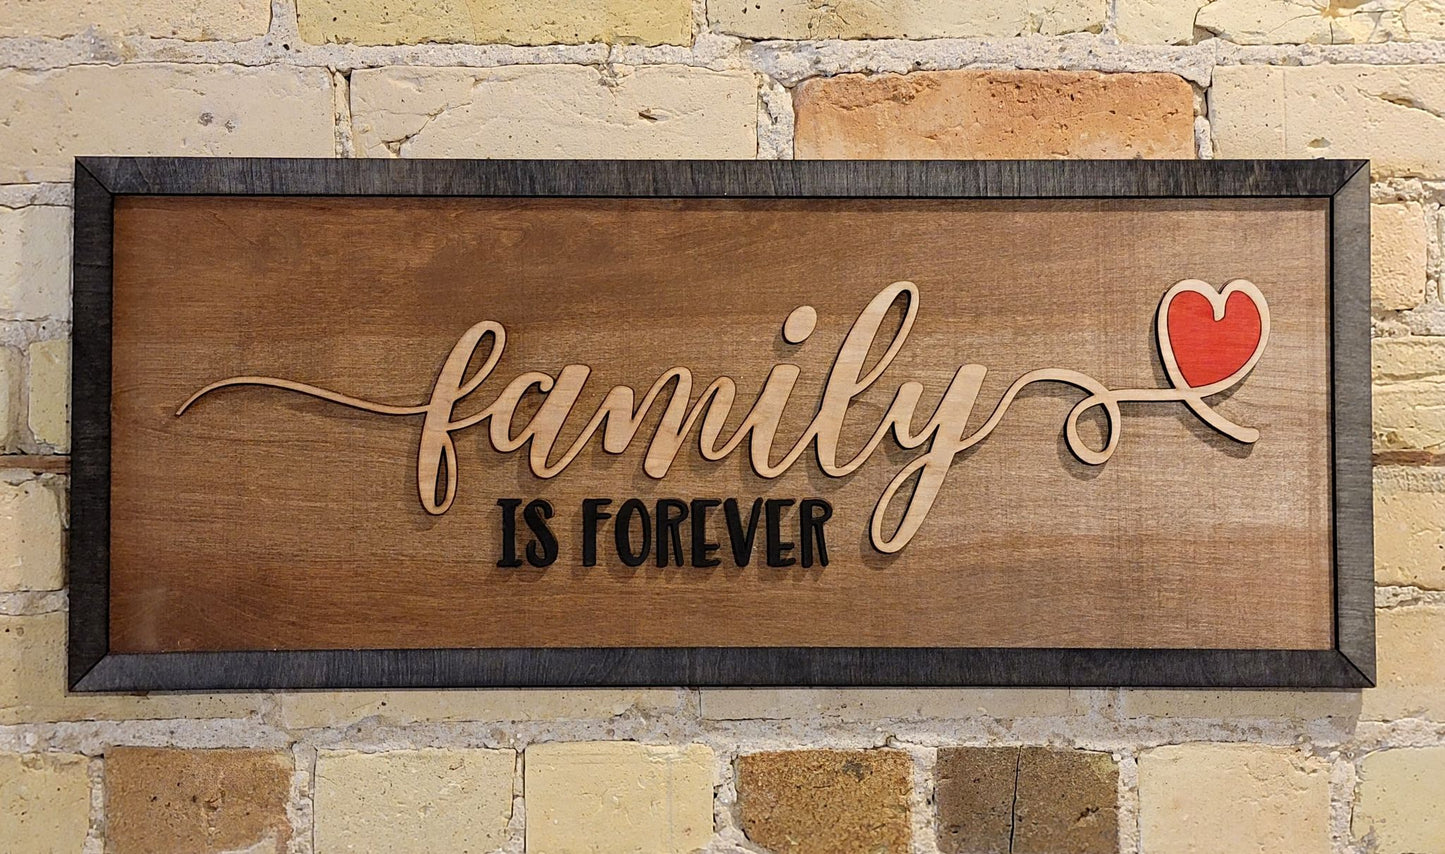 Family is Forever